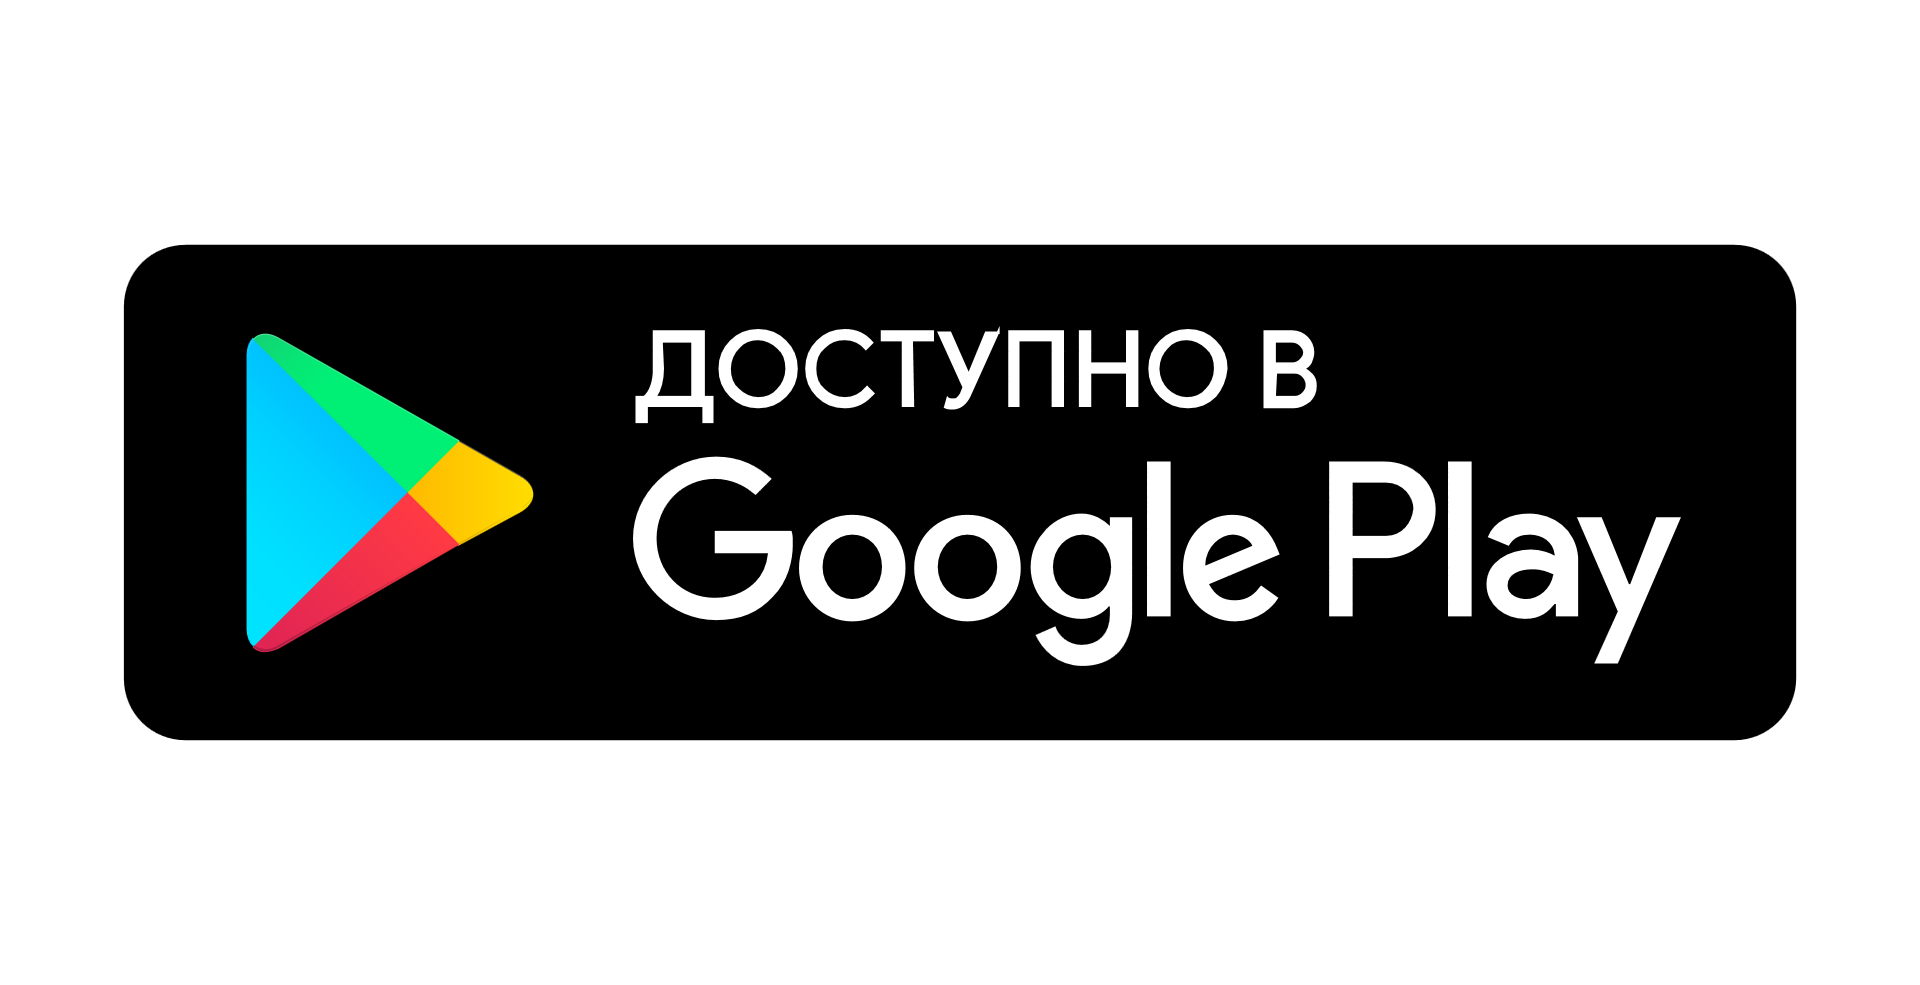 Гугл плей. Логотип Google Play. Доступно в гугл плей. Доступно в гугл плей иконка. Edition google play